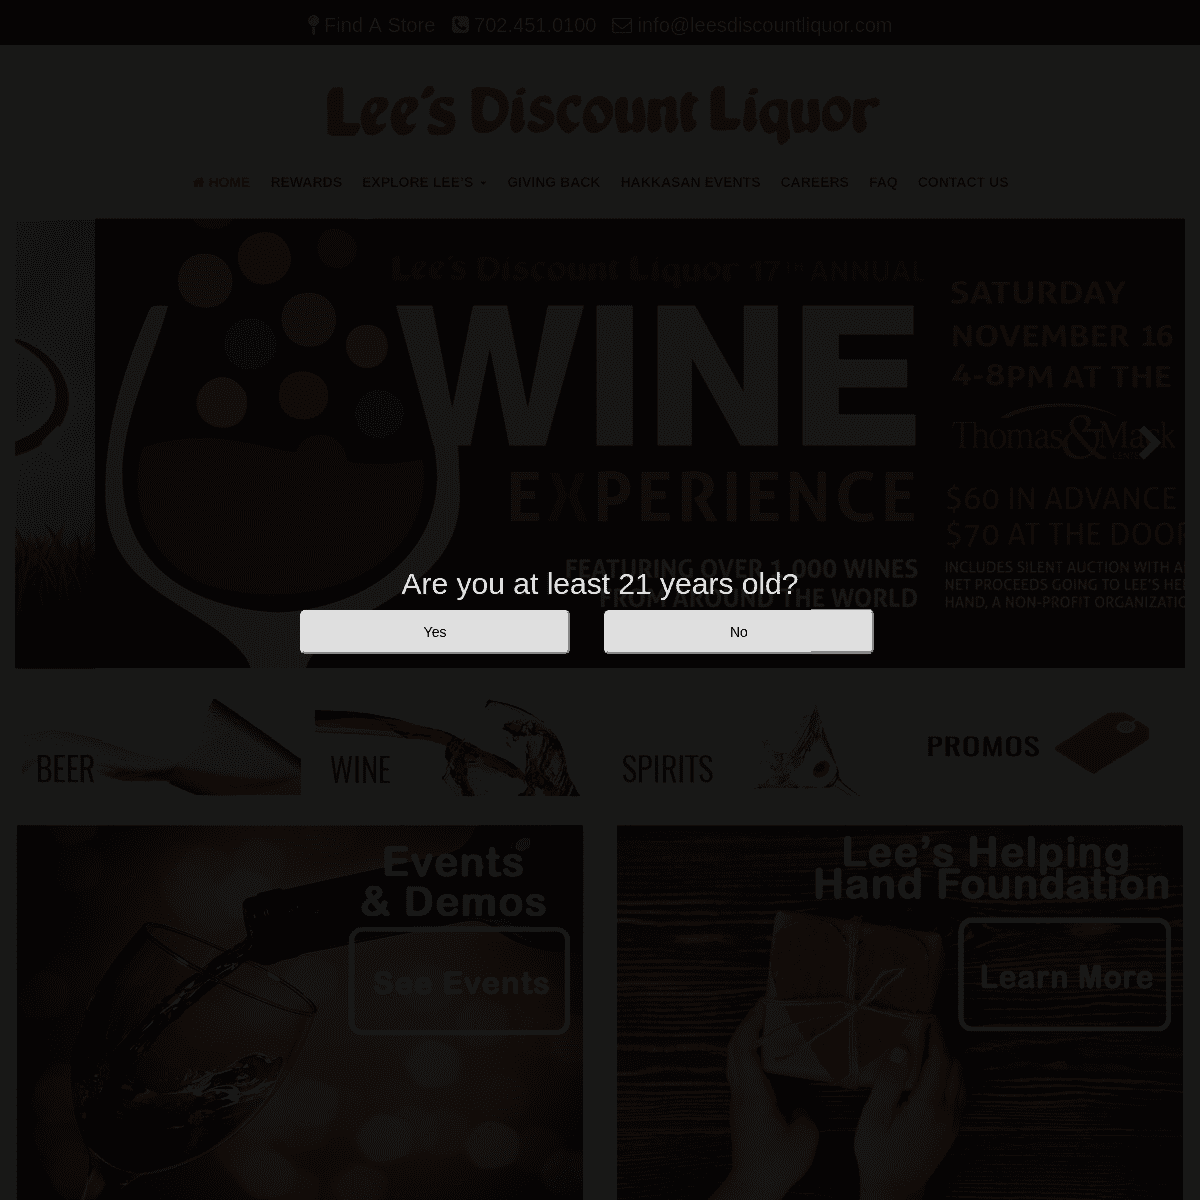 Lee's Discount Liquor – Good Liquor At Great Prices